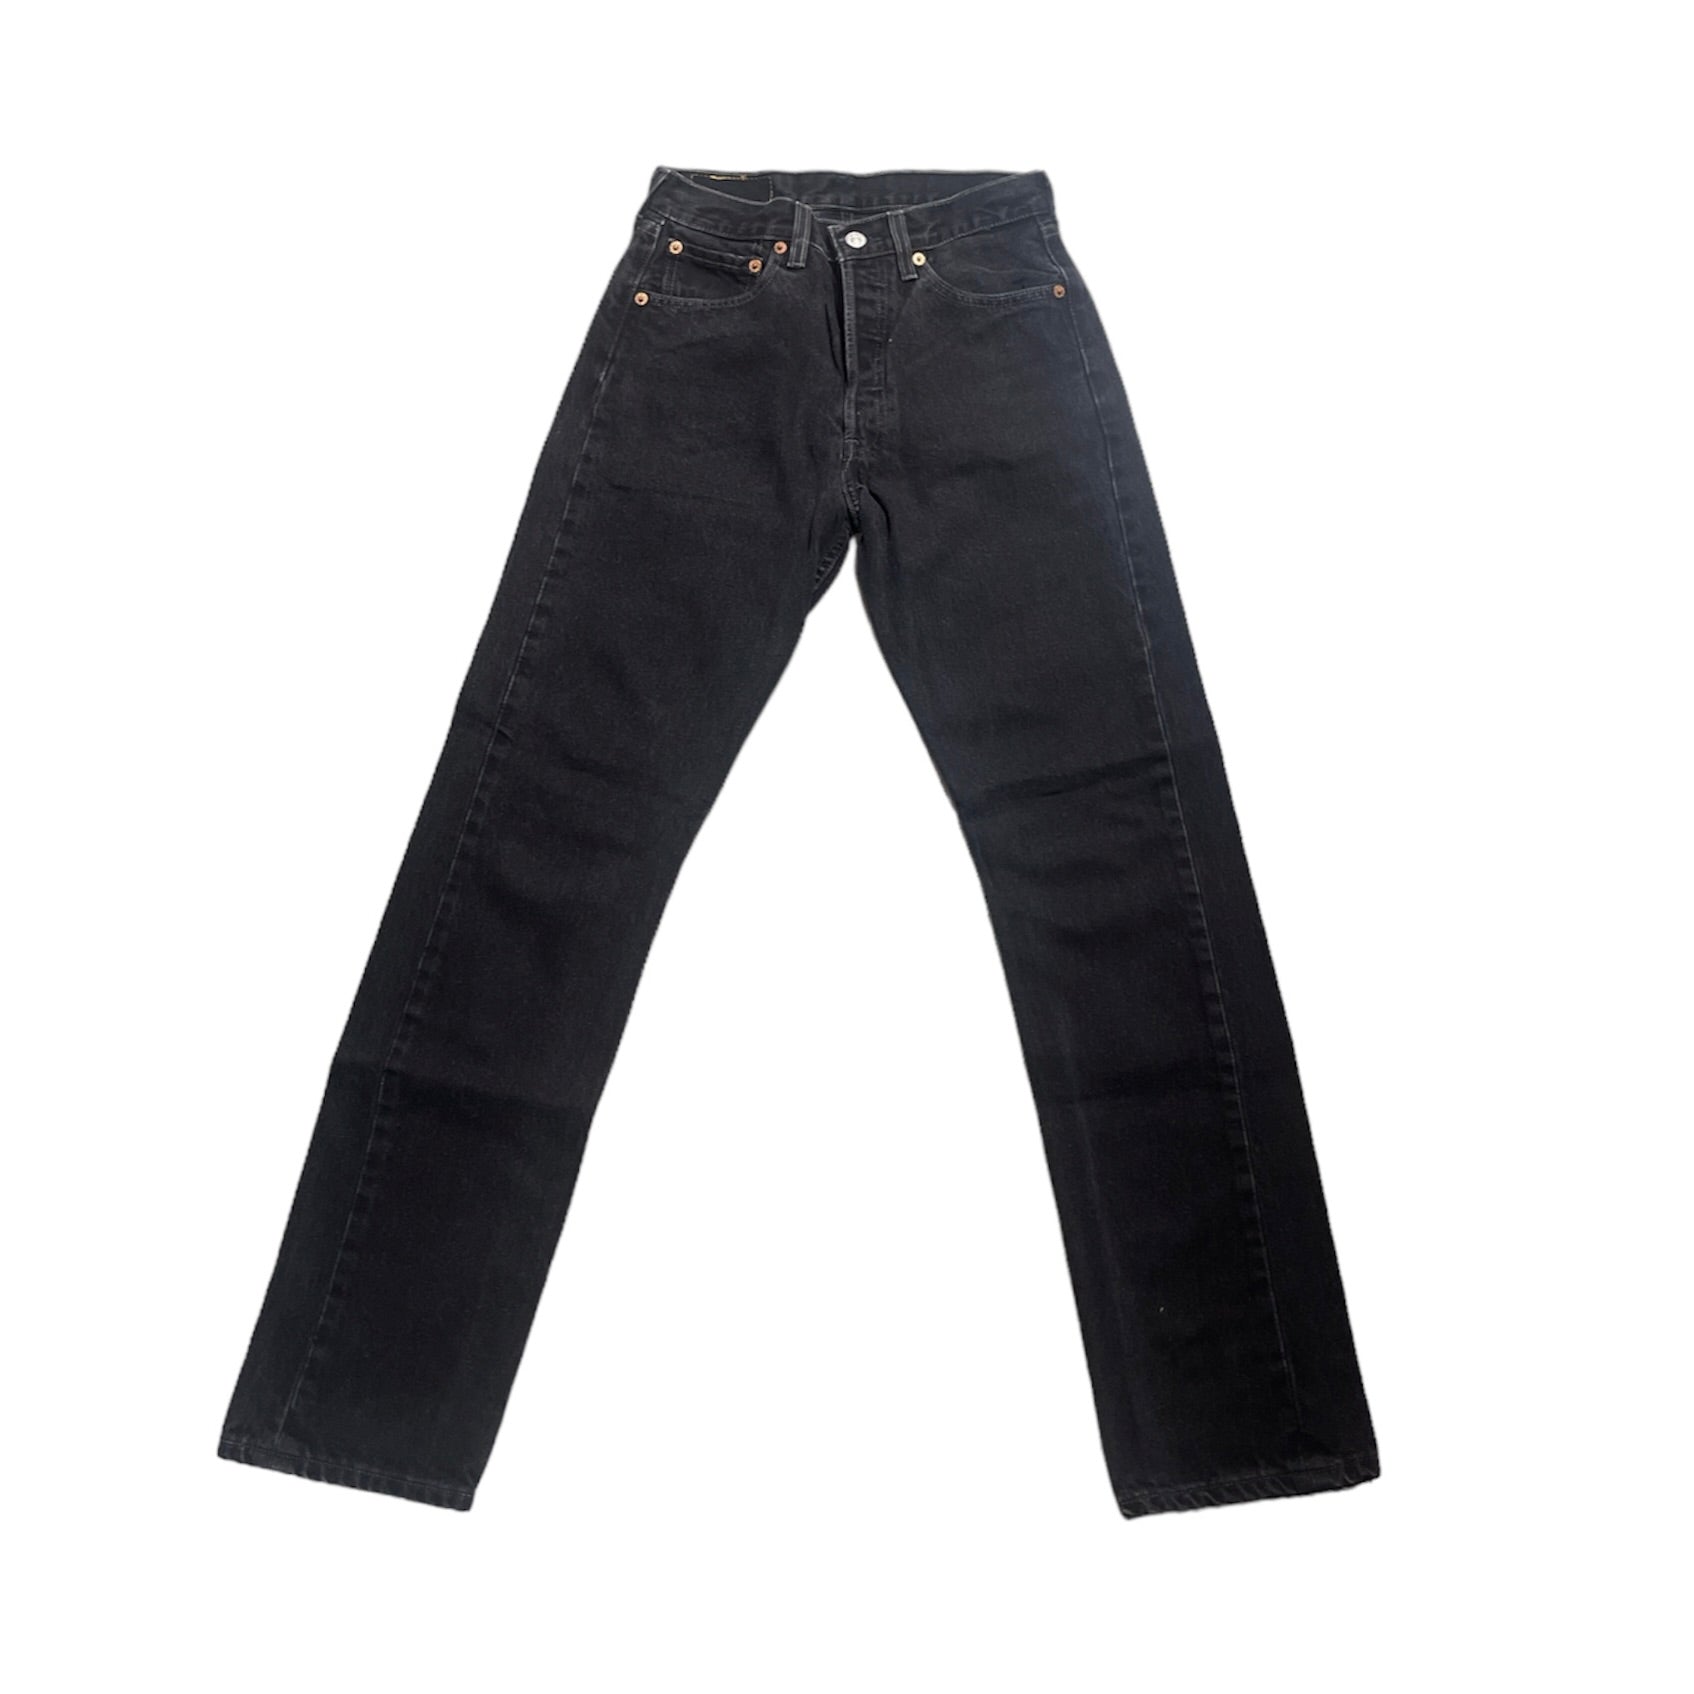 Vintage Levis 501 Vintage Black/Grey Jeans (W28/L32)